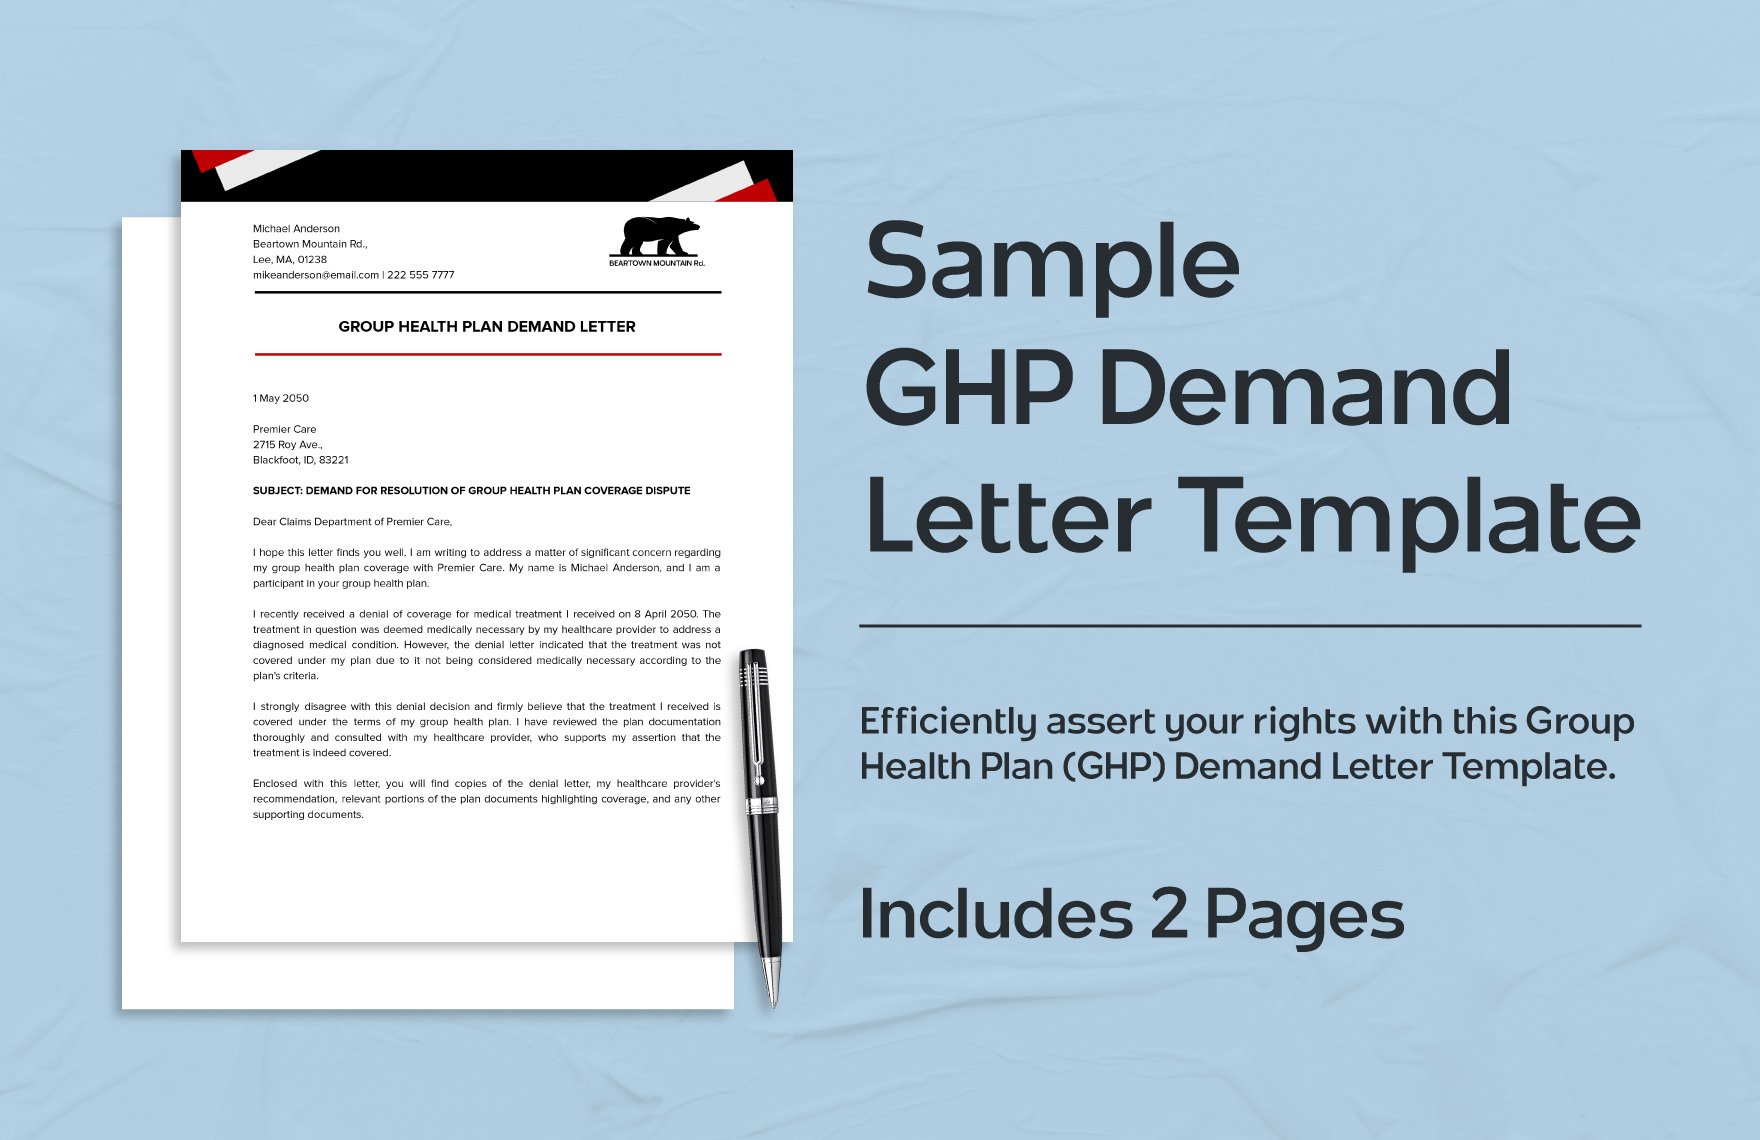 Sample GHP Demand Letter Template